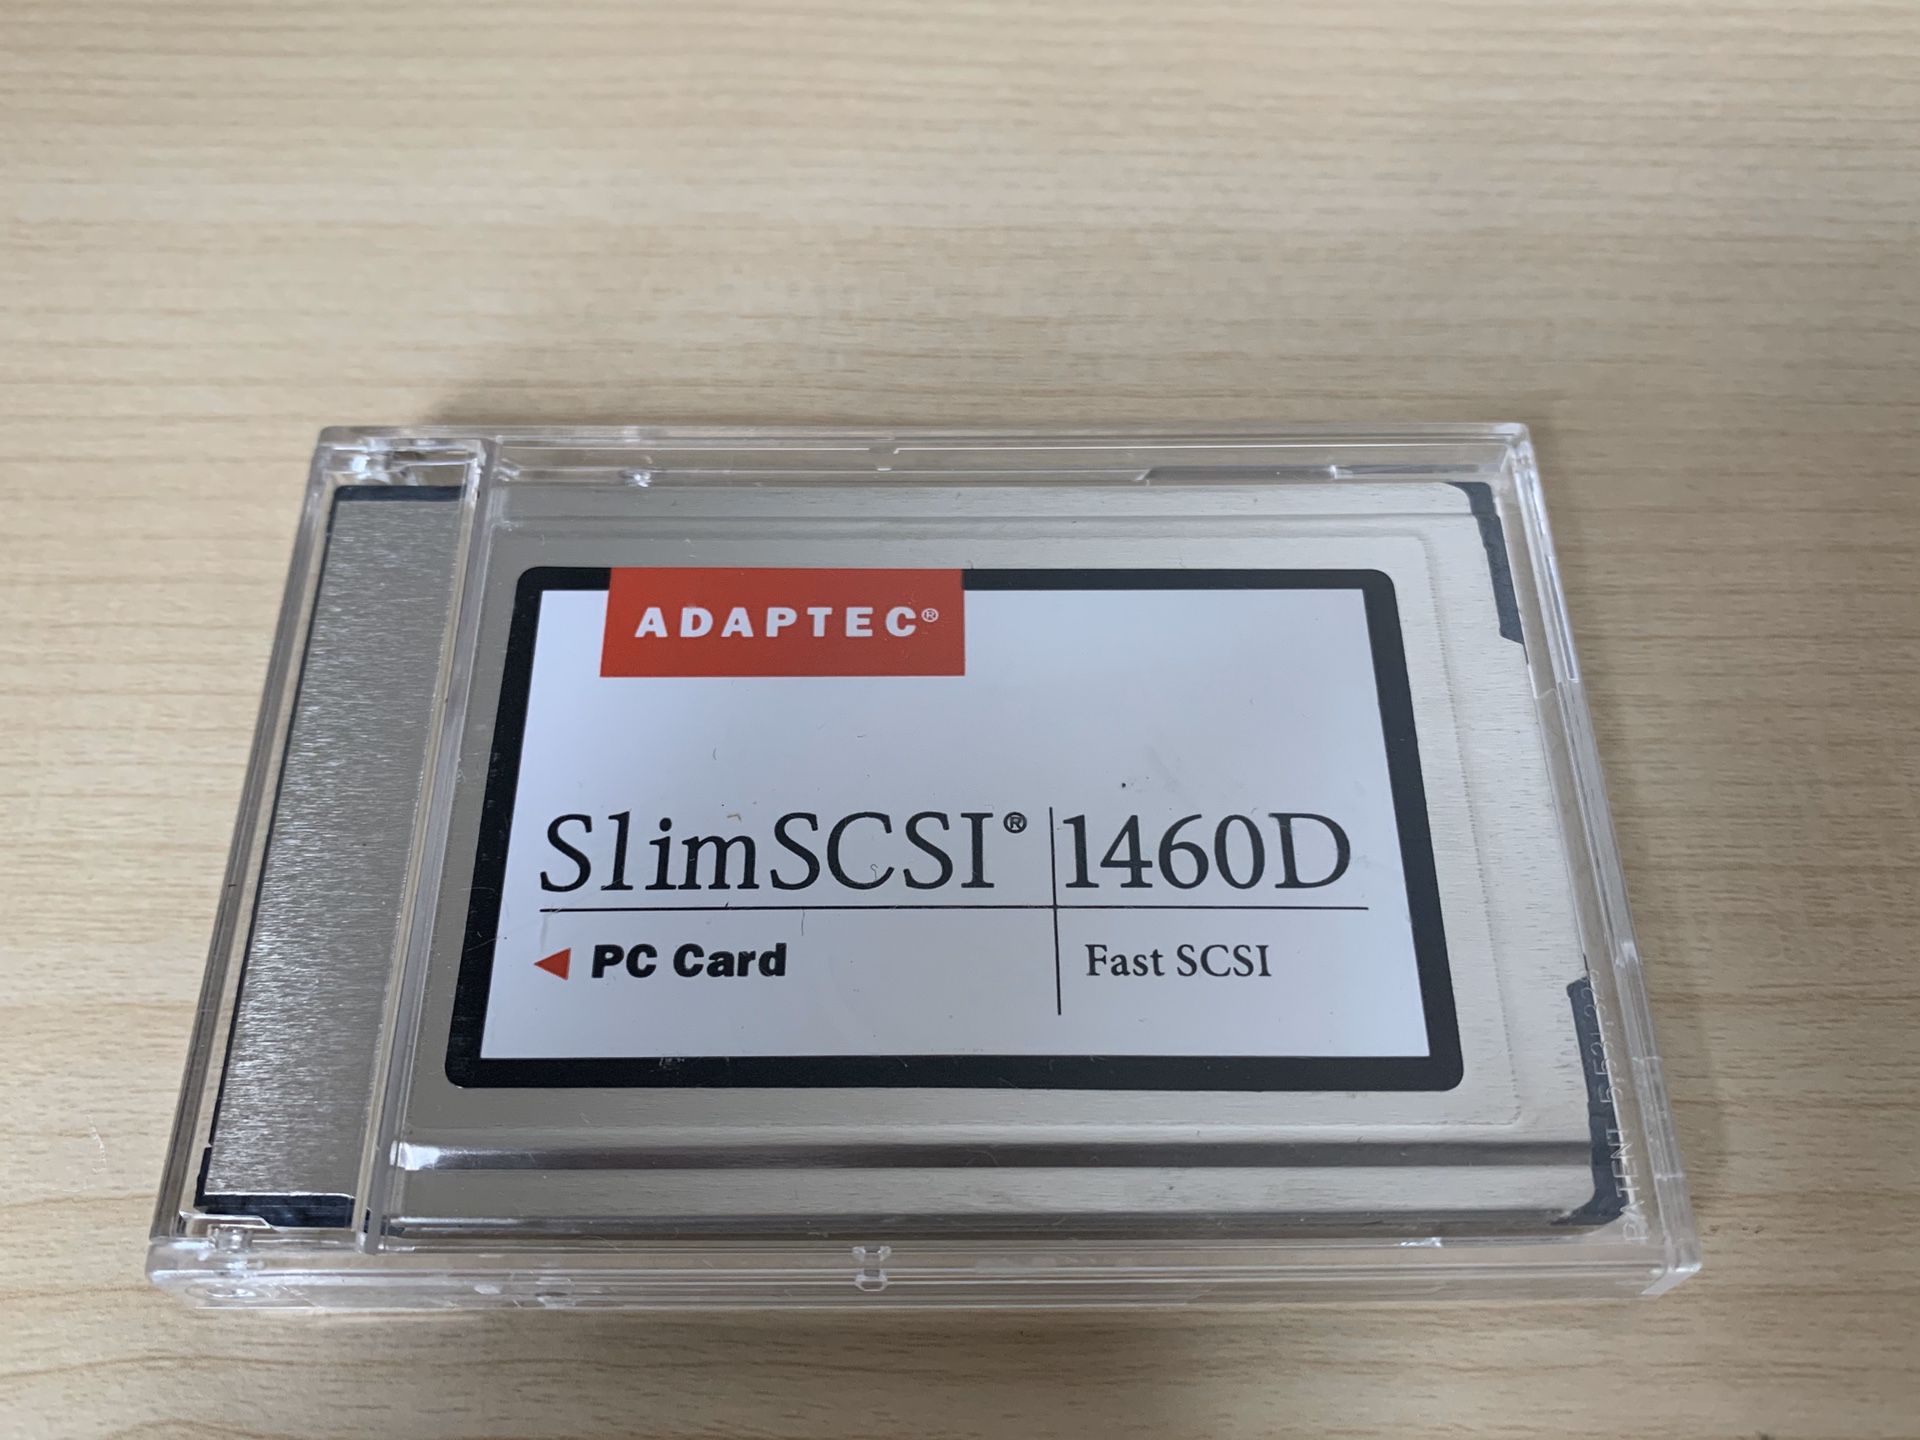 ADAPTEC SlimSCSI 1460D Fast SCSI PC Card 1807400-B